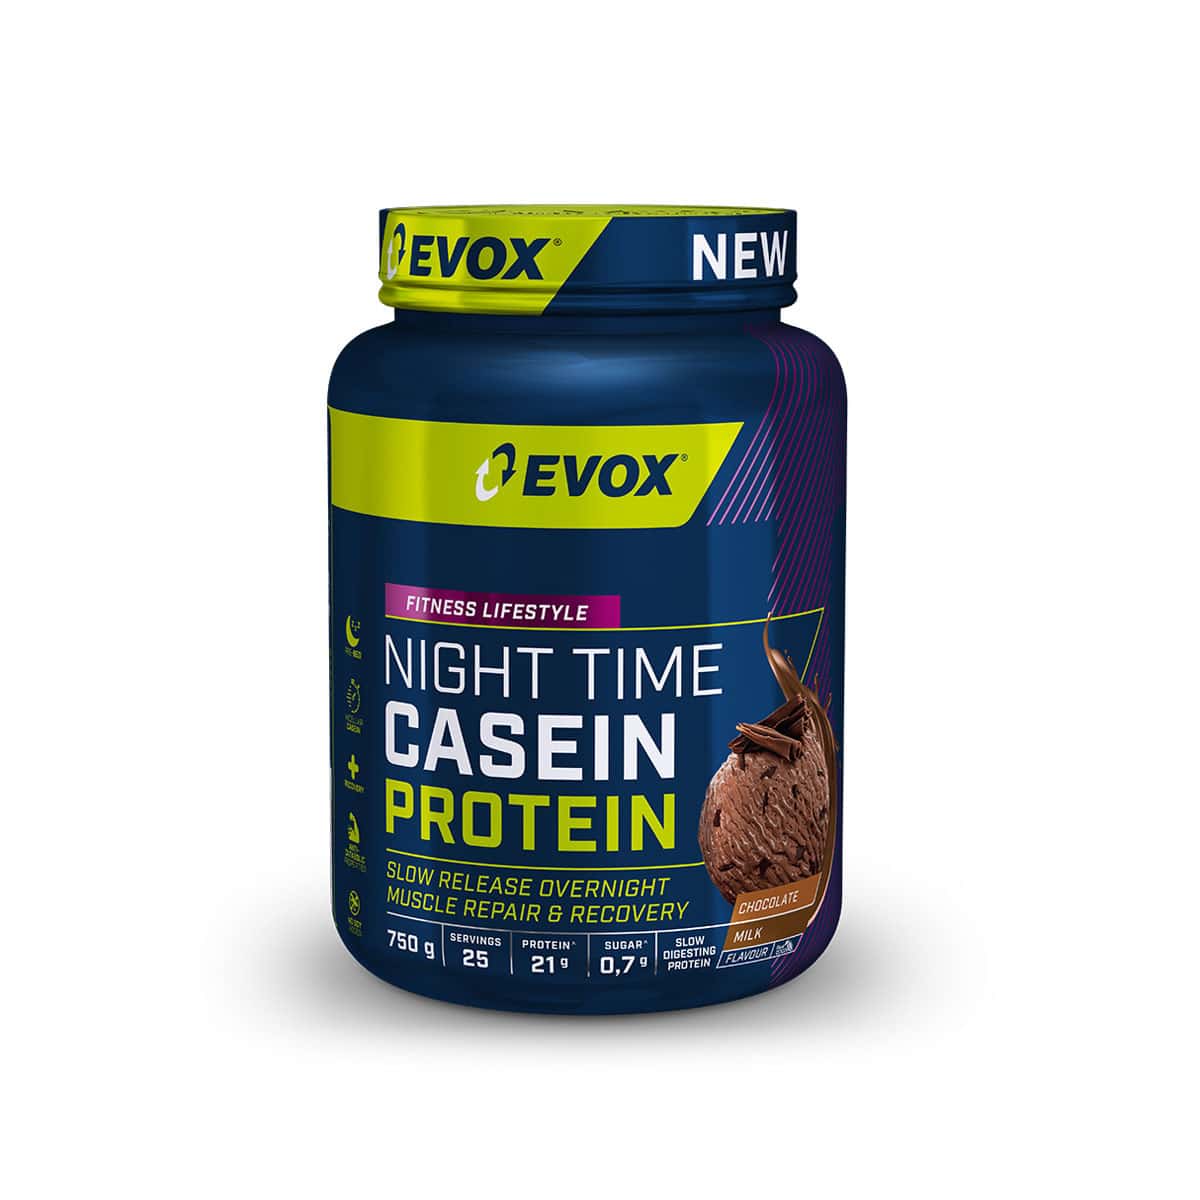 Evox Night Time Casein Protein Chocolate - 750g